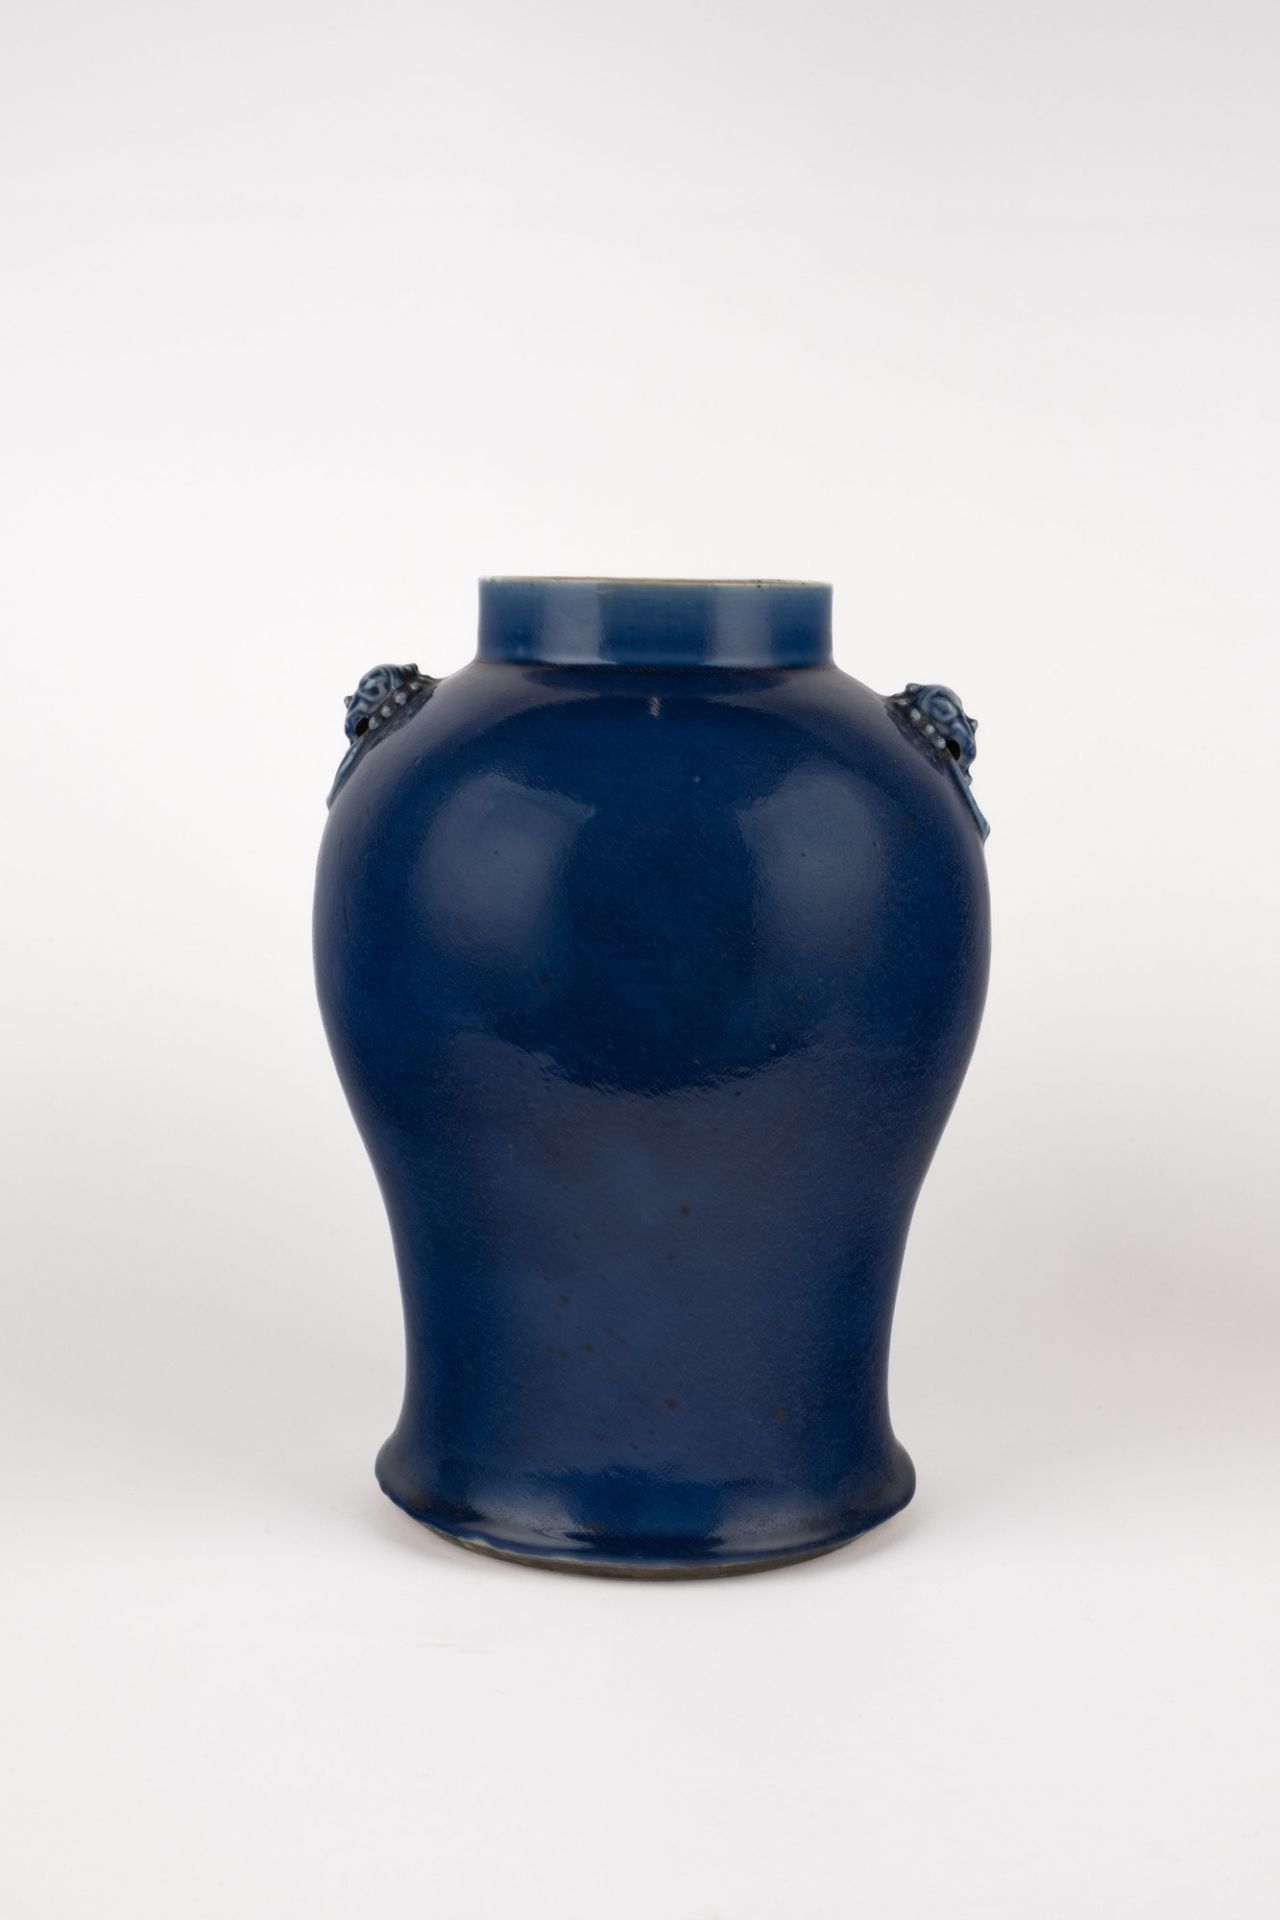 A blue porcelain vase. China, late 19th c.